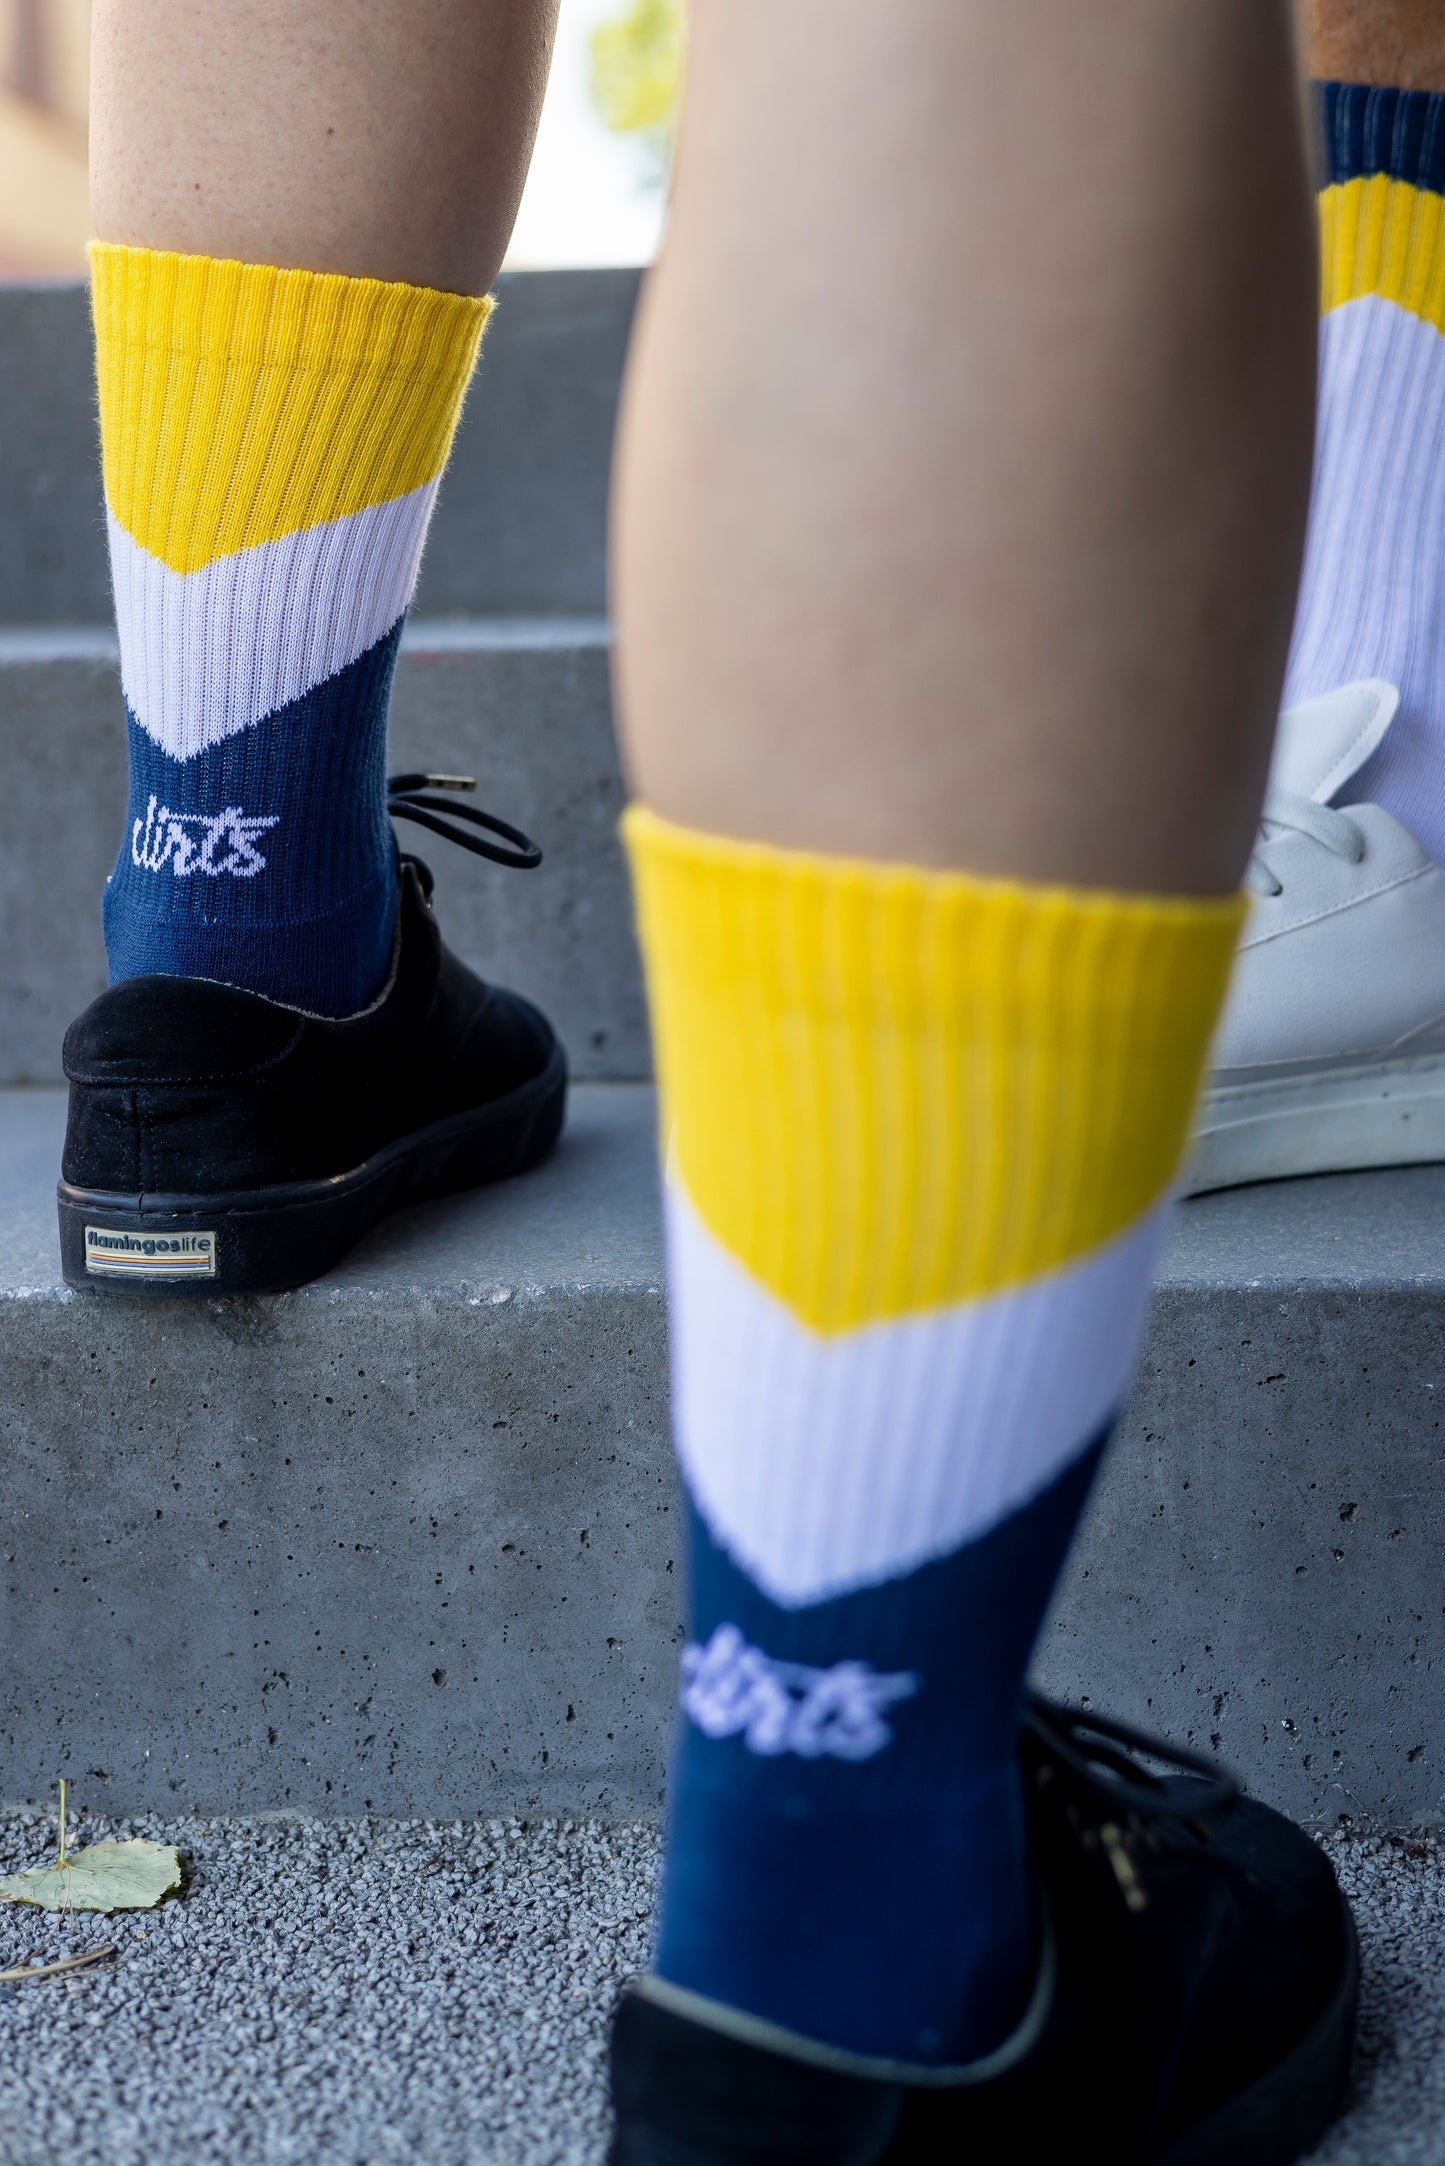 ZIG ZAG Socks, Blau/Weiß/Gelb